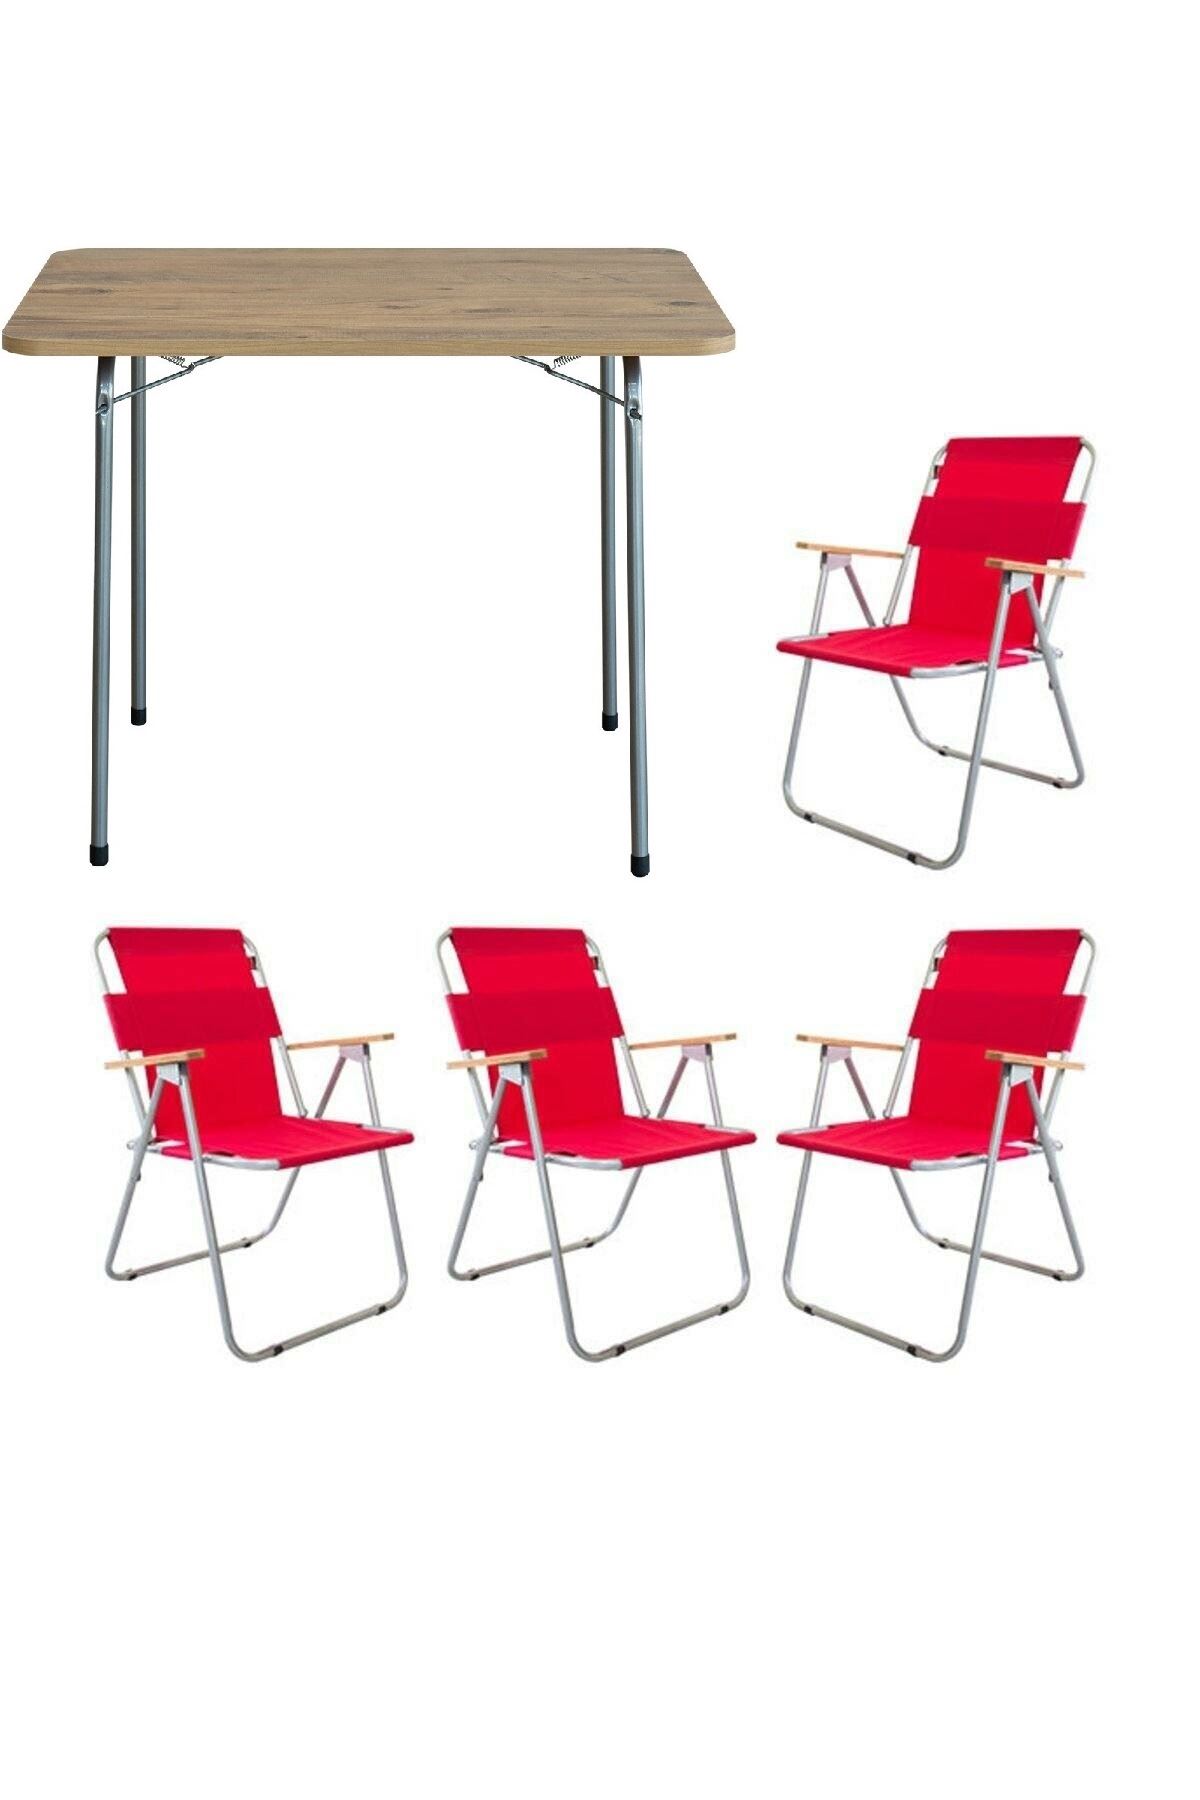 Bofigo 60x80 Pine Folding Table + 4 Pieces Folding Chair Camping Set Garden Balcony Set Red